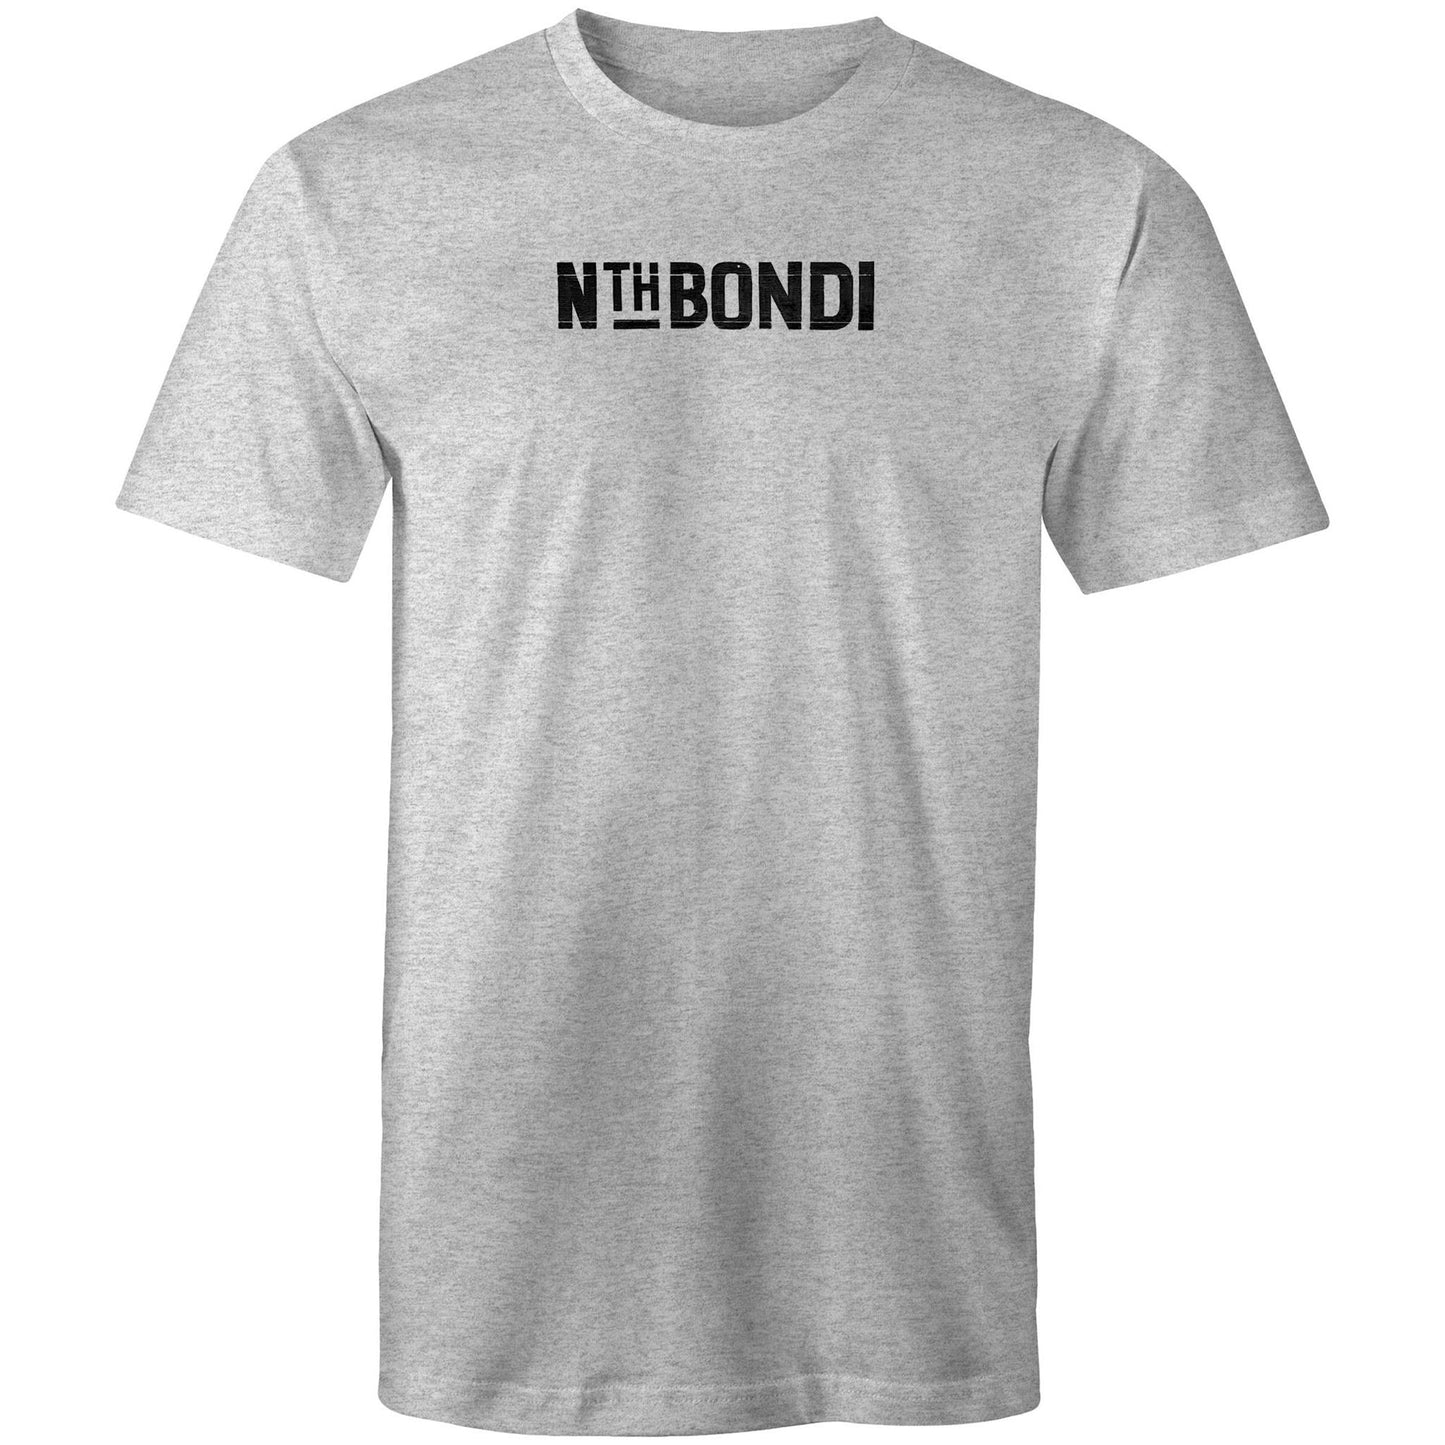 Nth BONDI T Shirts for Men (Unisex)